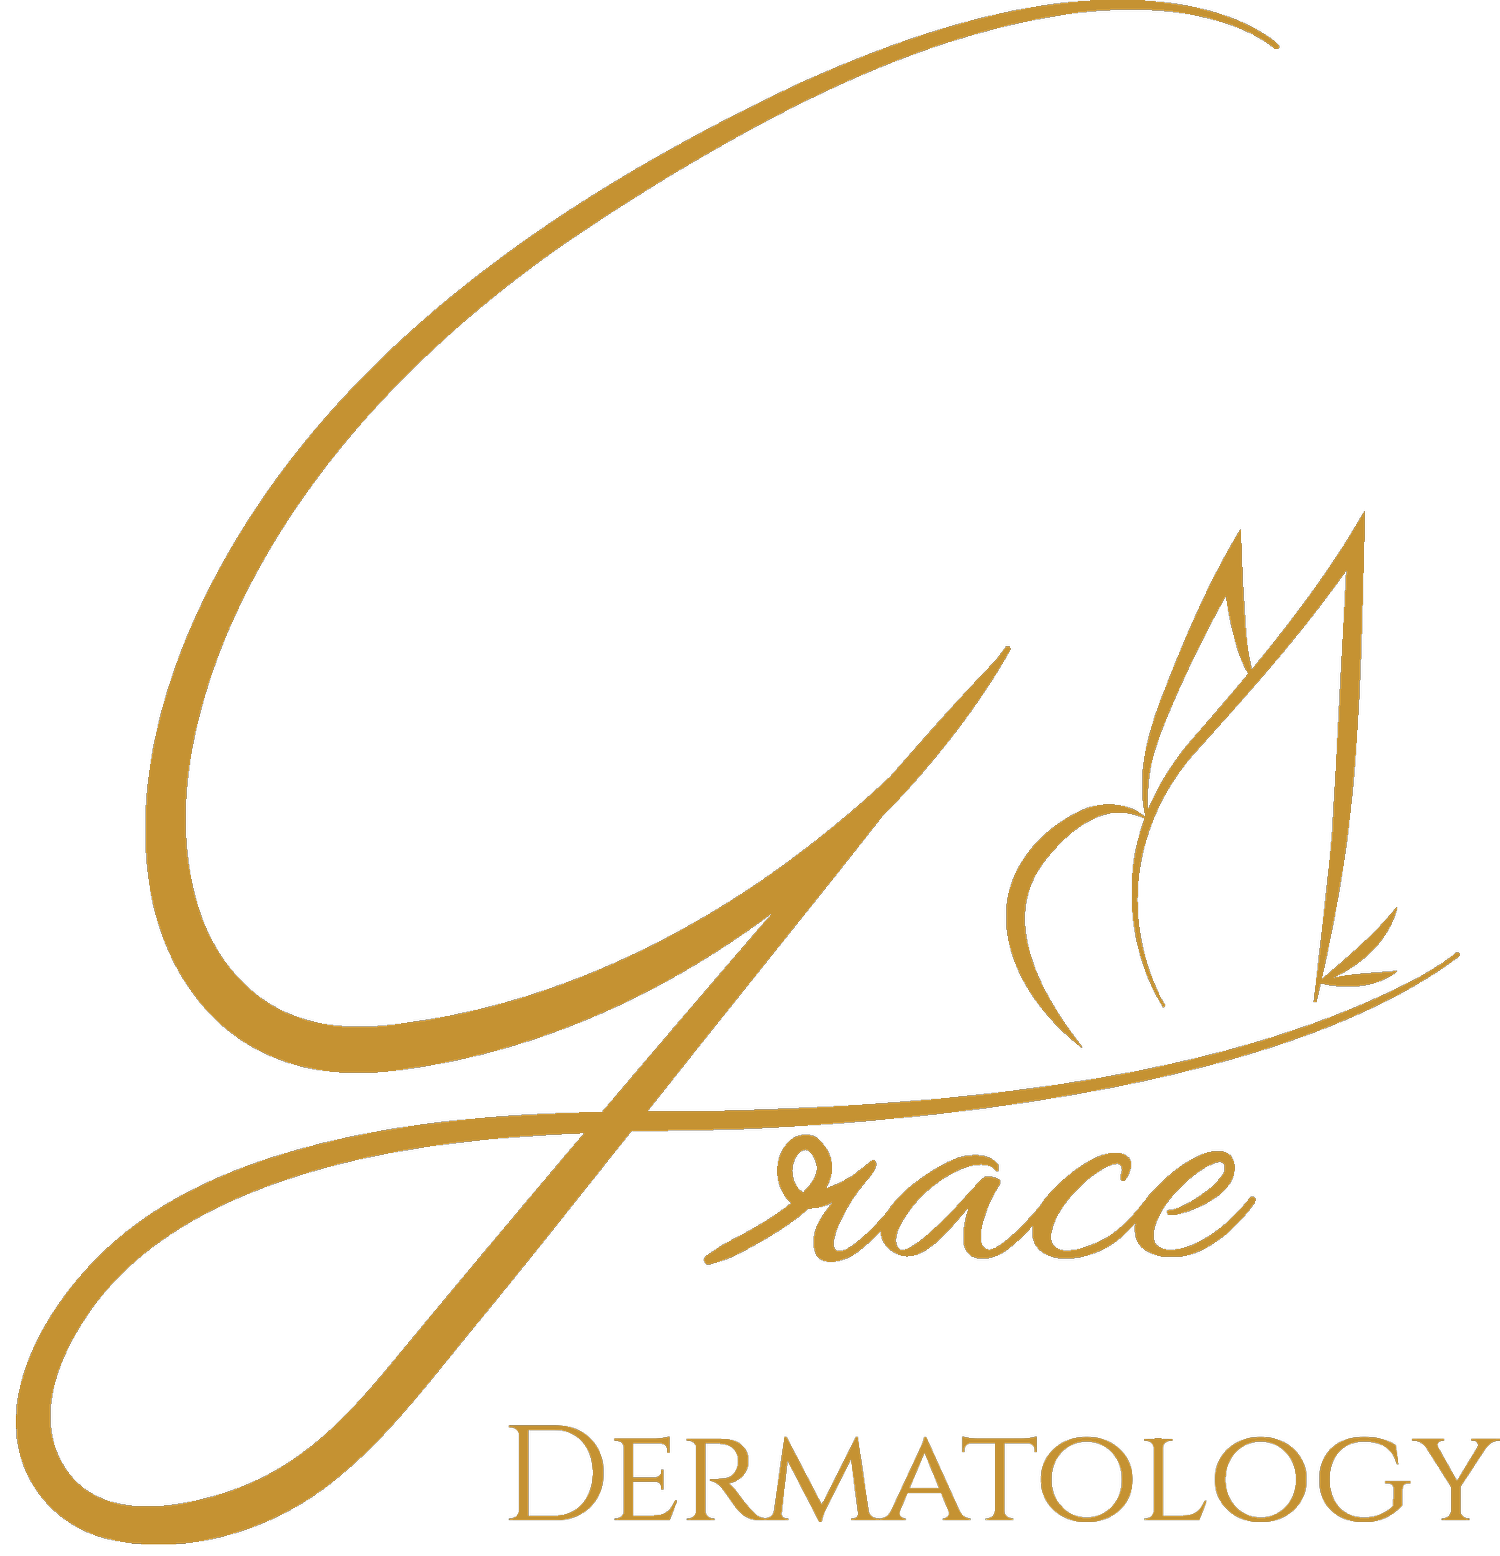 Grace Dermatology